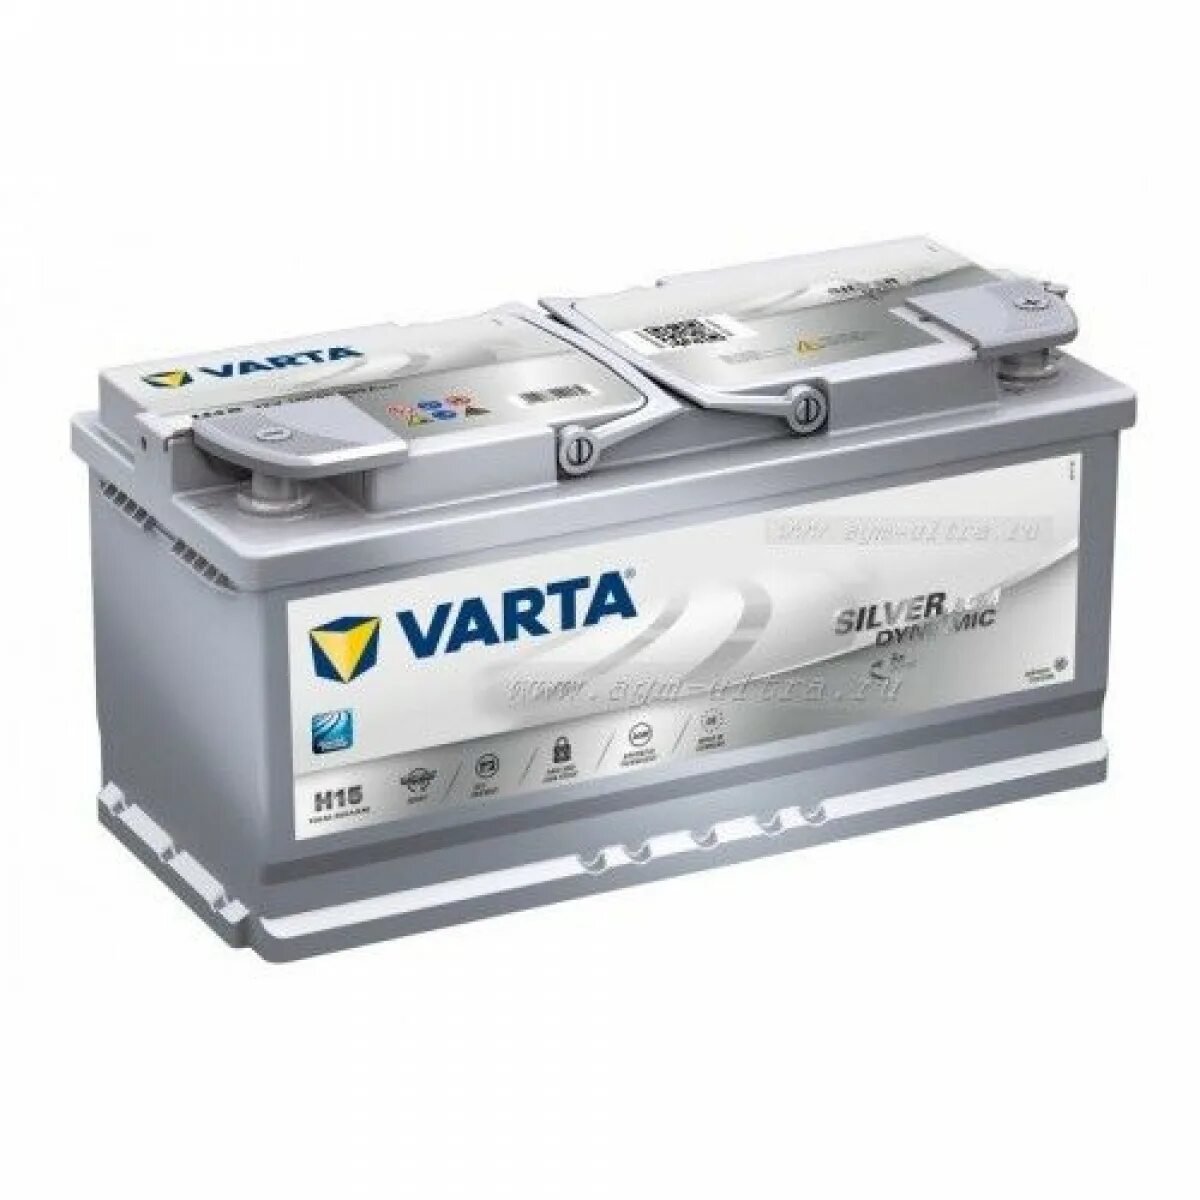 Varta start-stop Plus 6ct-80 r+. 595901085 Varta AGM. Varta Silver Dynamic g14. Varta g14 595 901 085.